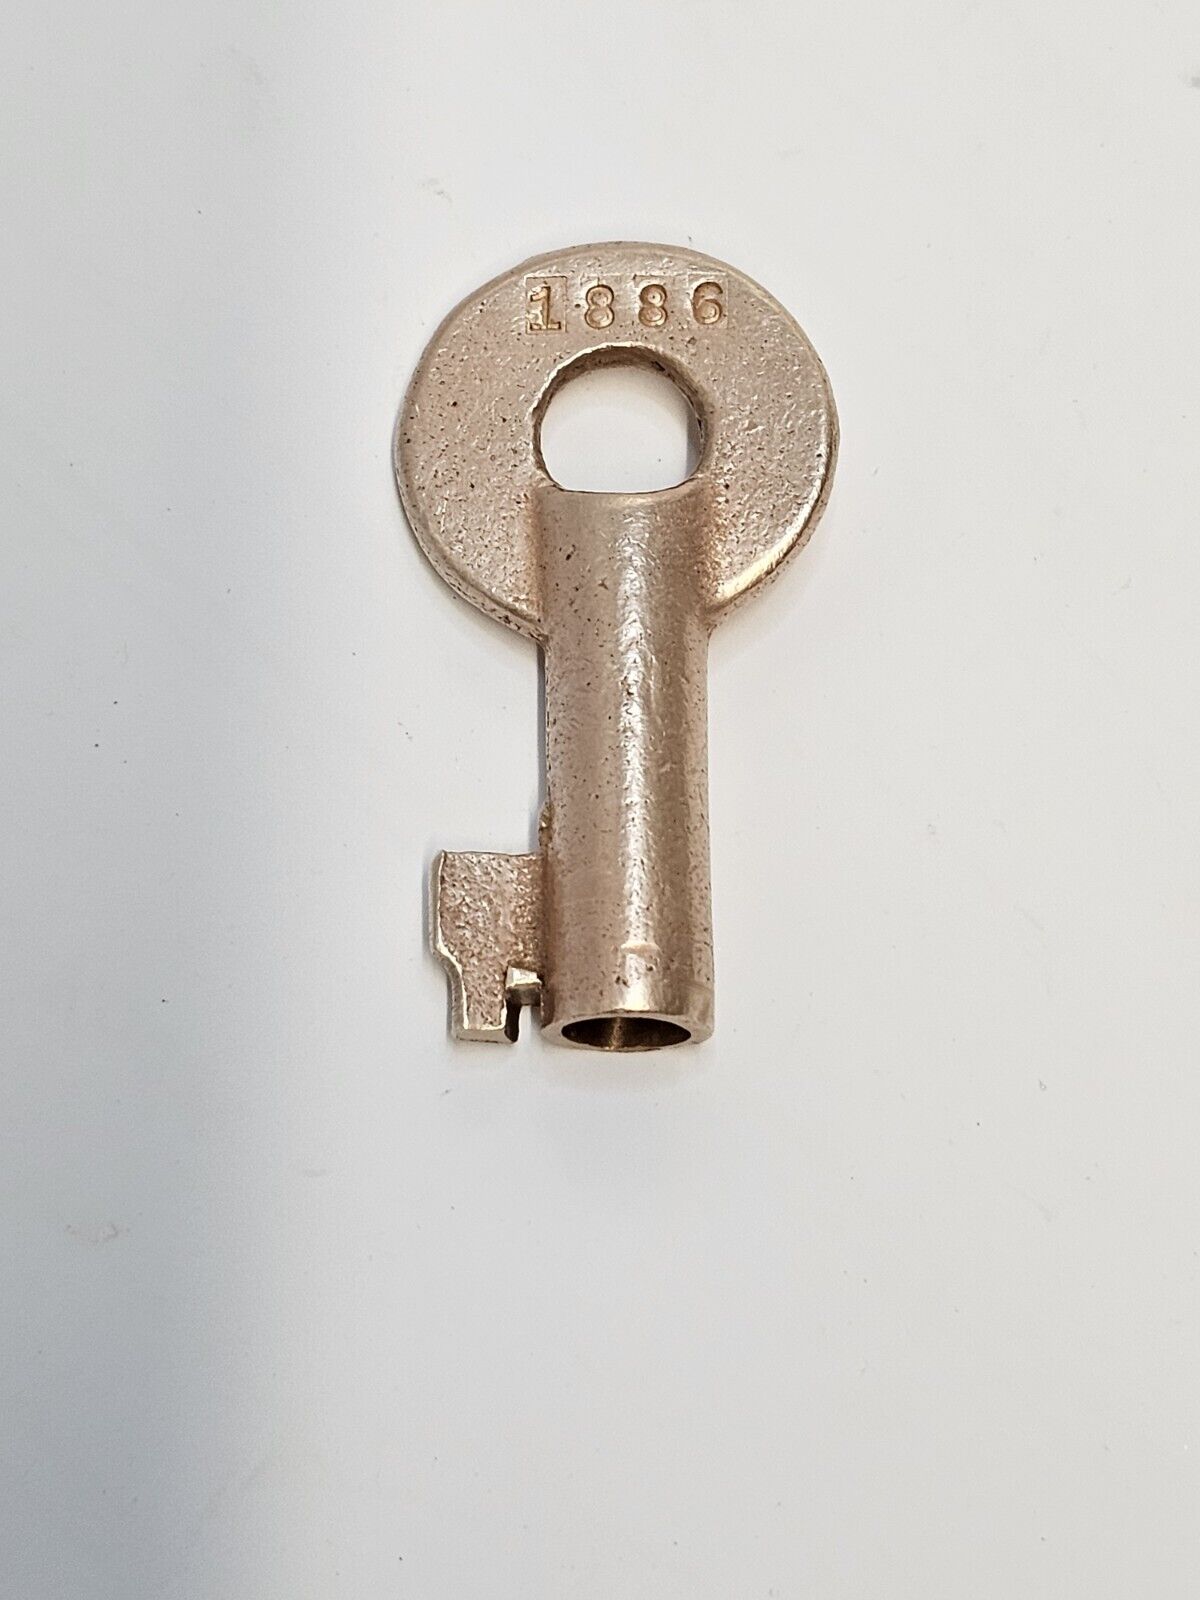 1886 Delaware, Lackawanna and Western DL&W Brass Barrel Key - Cleaned & Polished